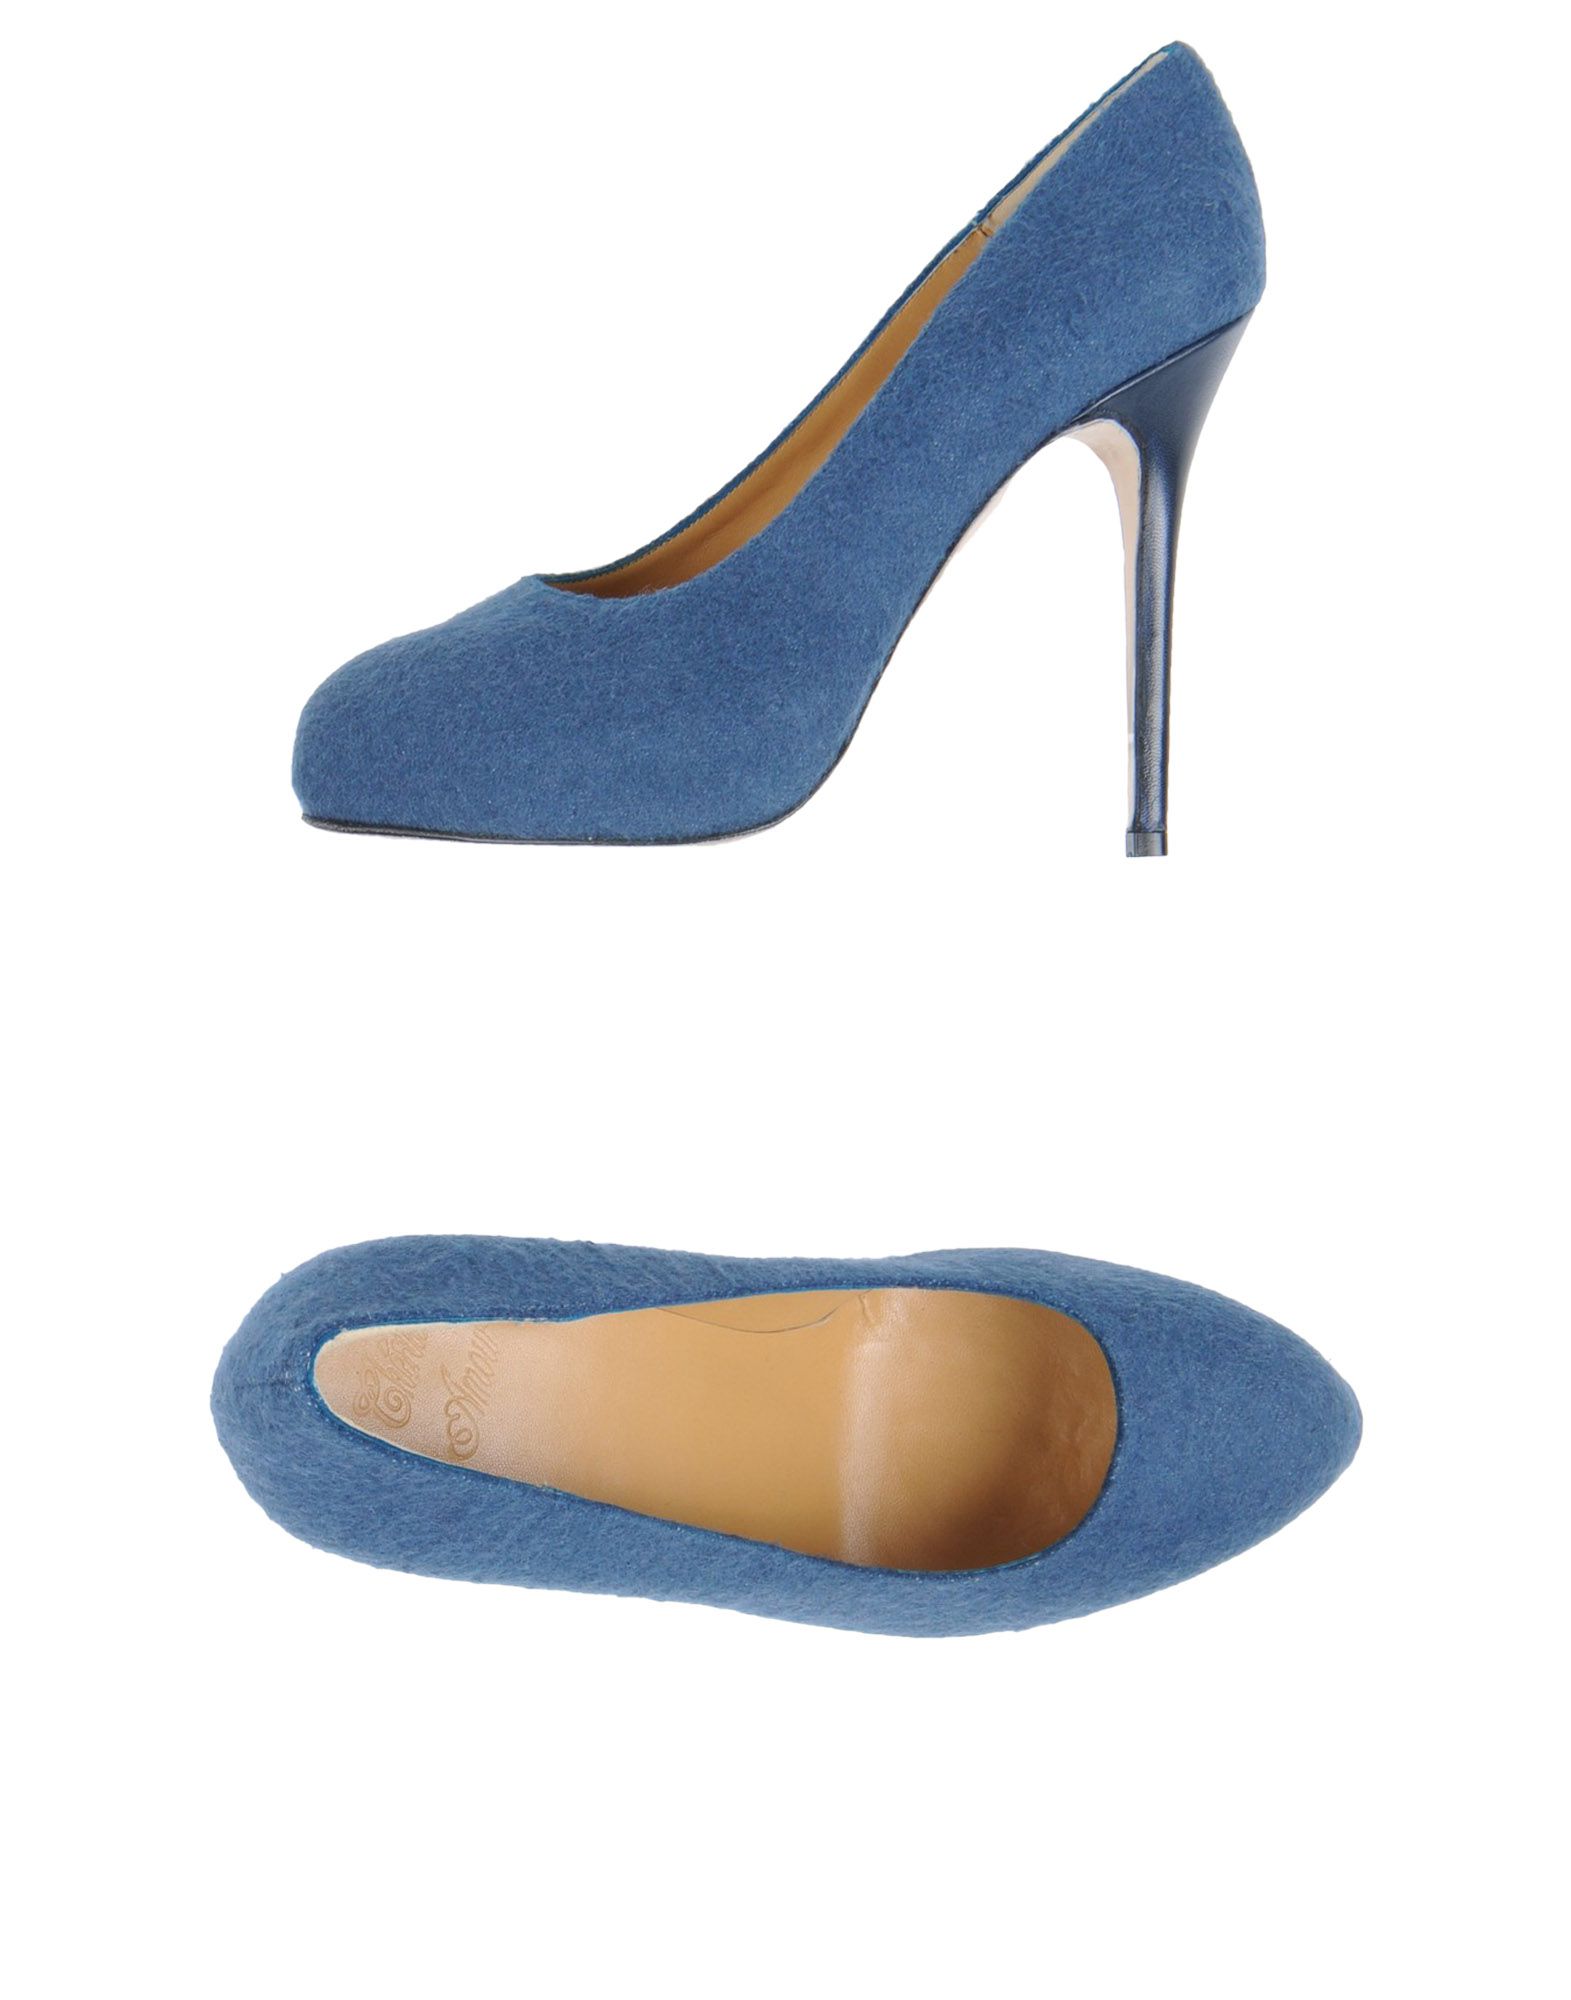 Foto chÉrie amour zapatos de salón plataforma Mujer Azul marino